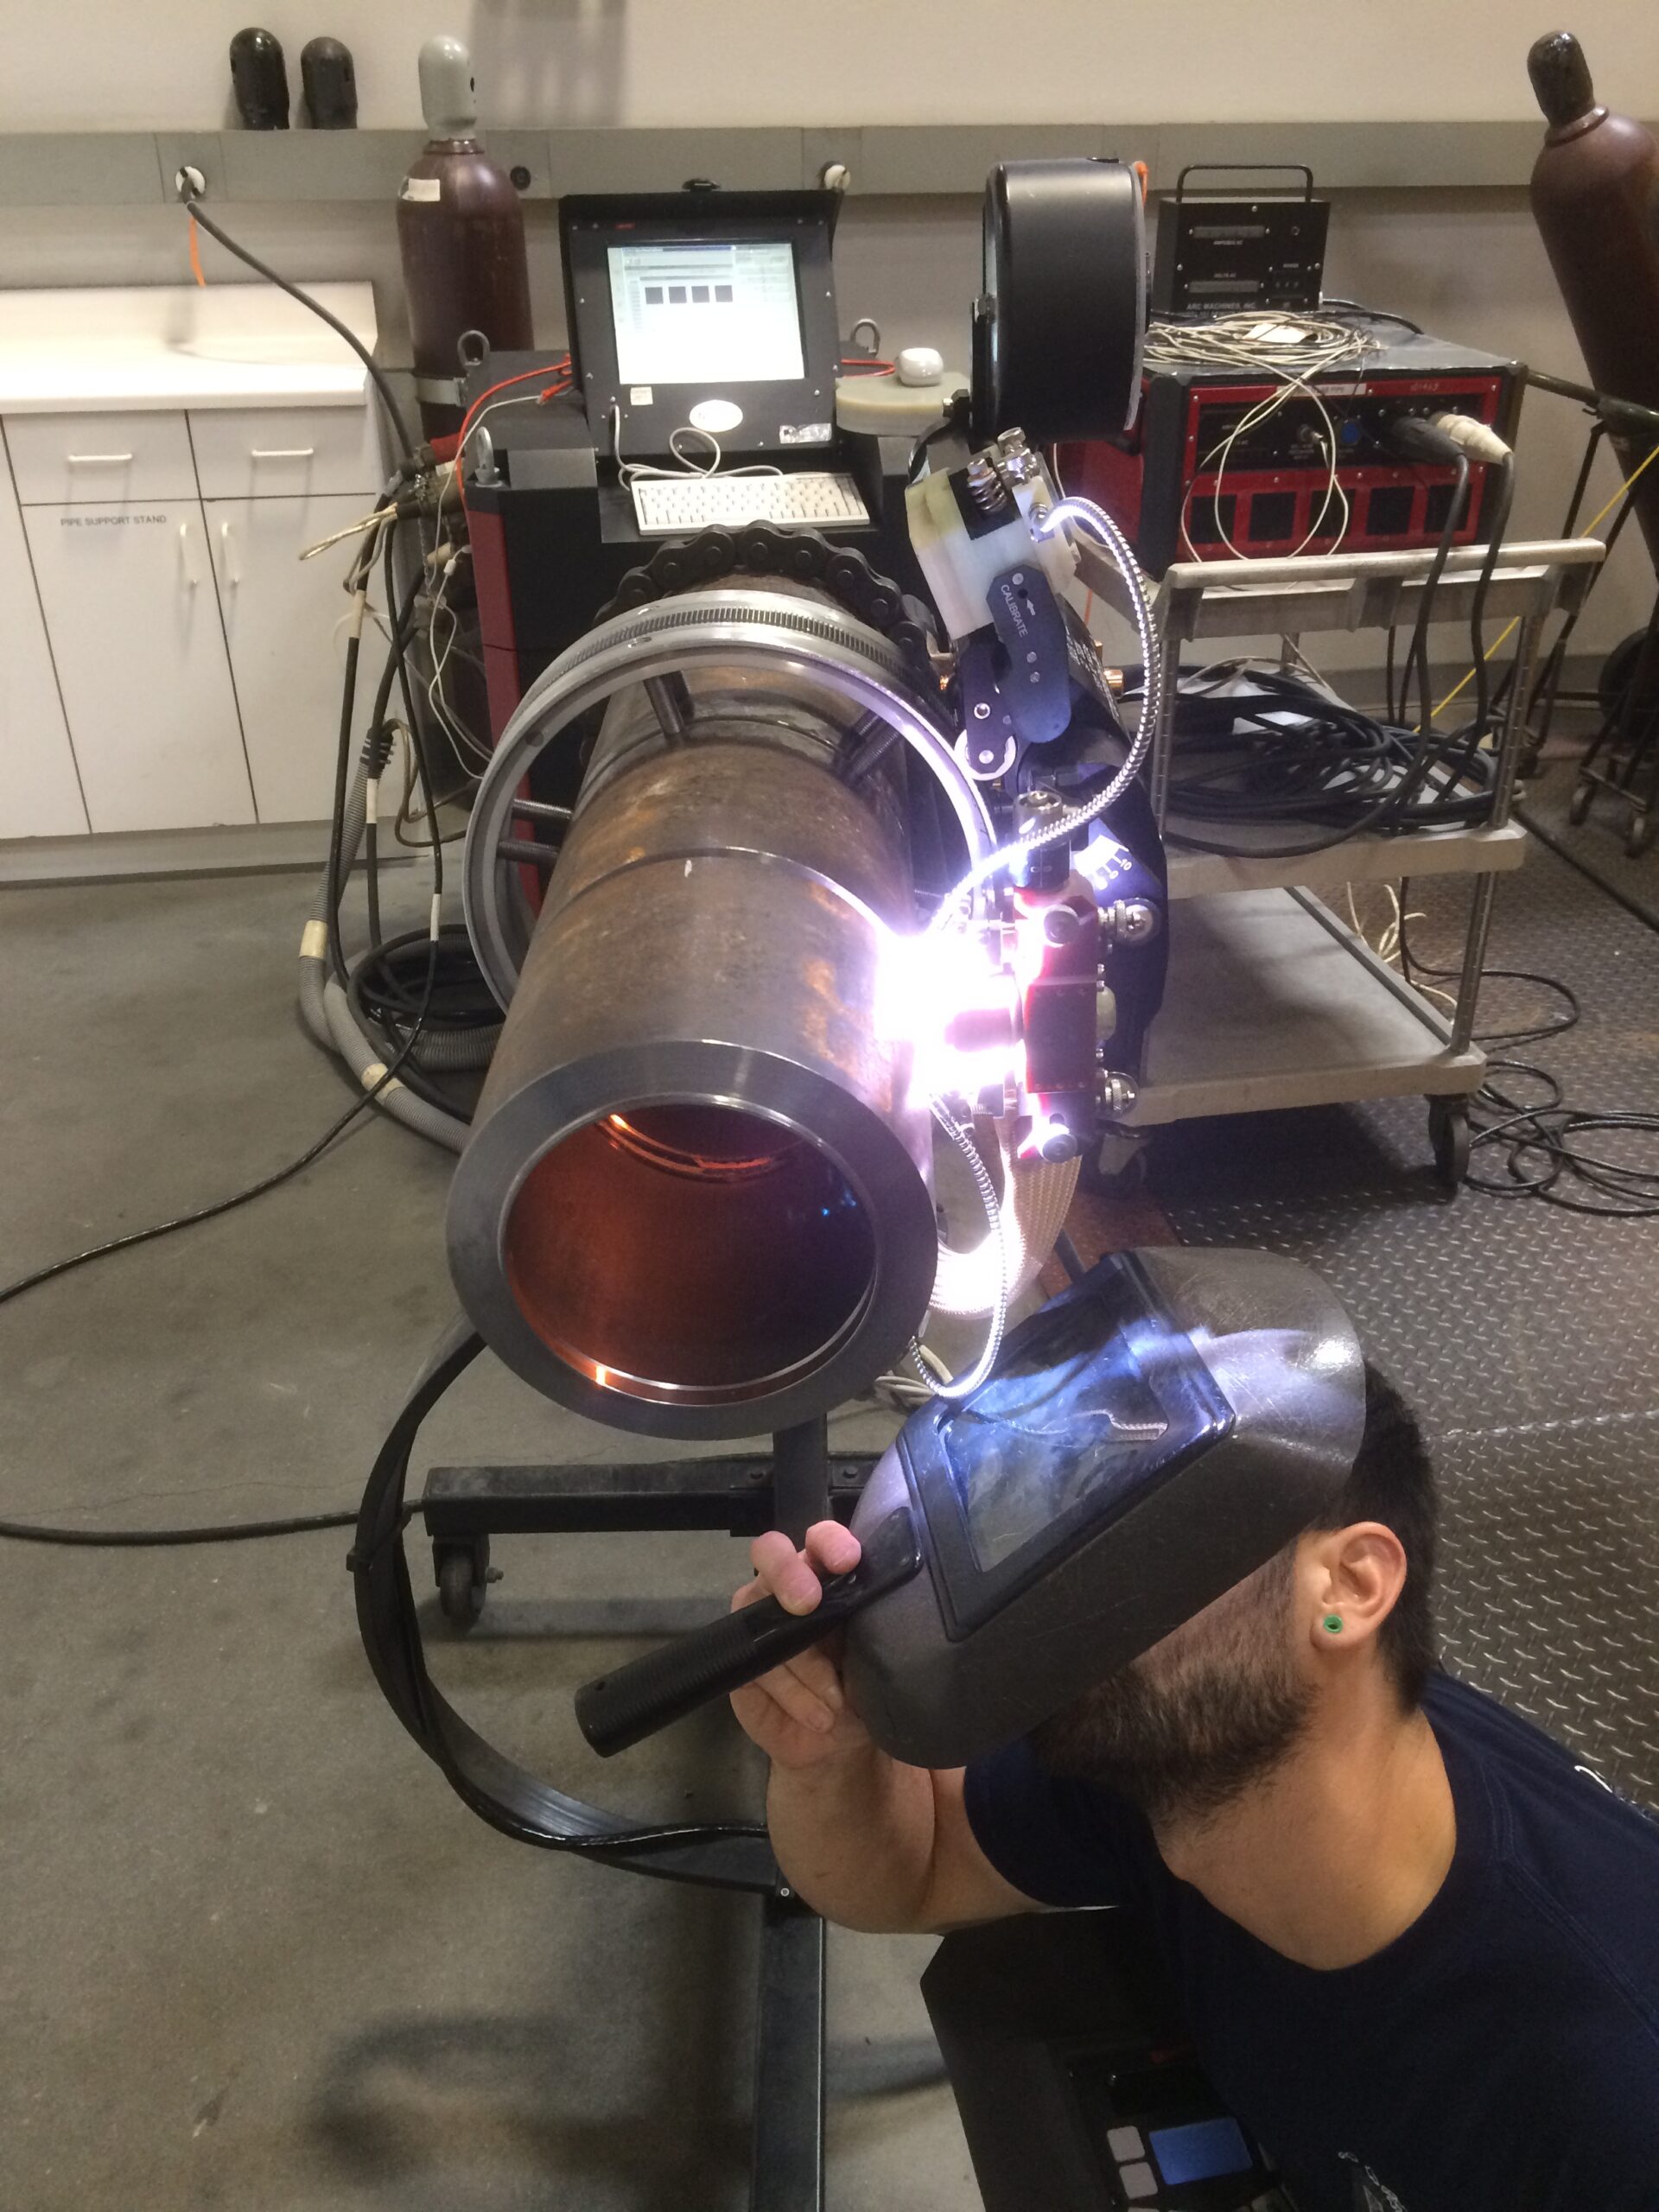 Orbital welding isn’t hard for welders already familiar with reading the metal